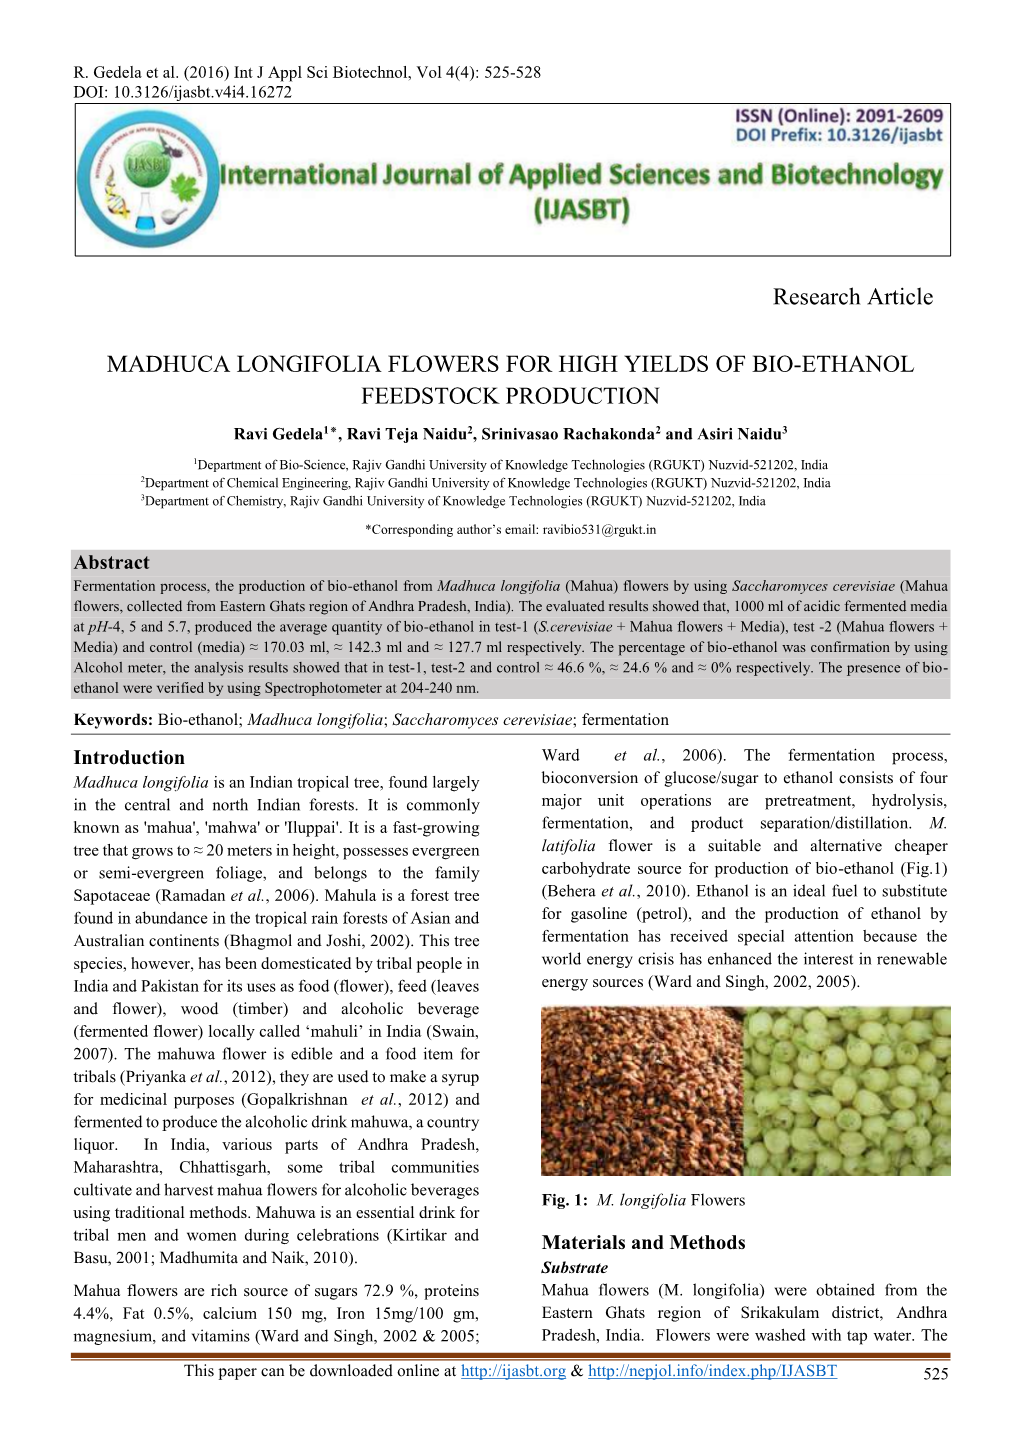 Madhuca Longifolia Flowers for High Yields of Bio-Ethanol Feedstock Production